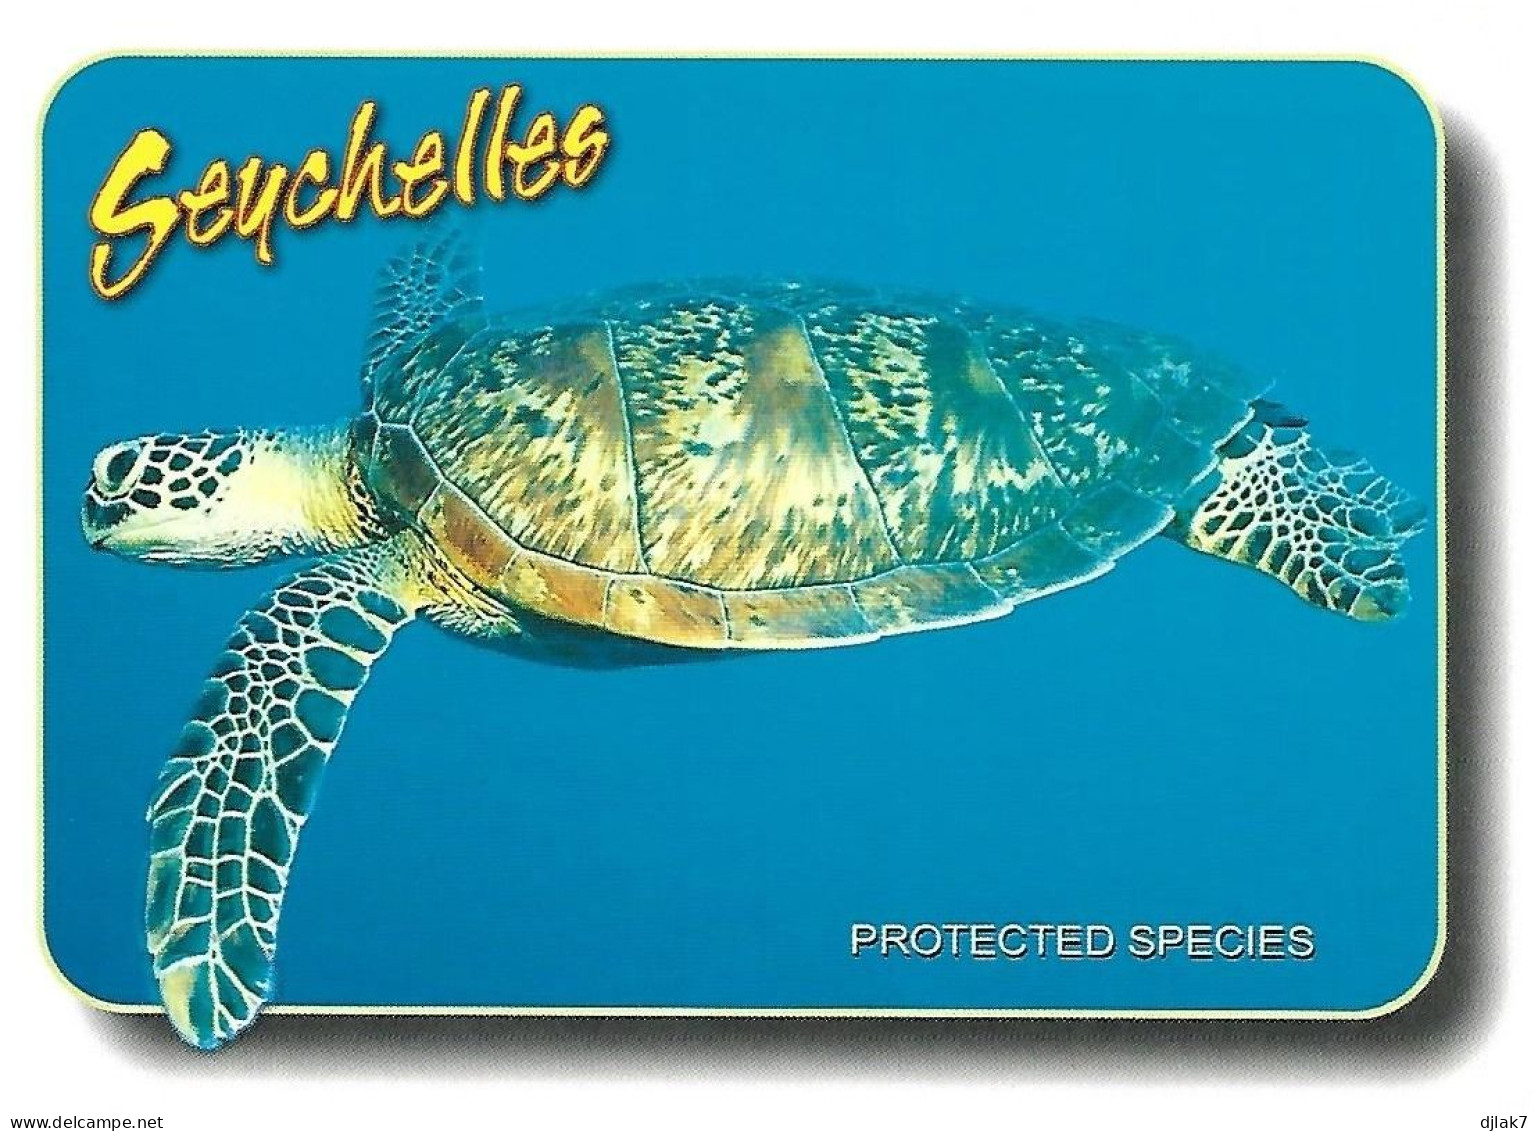 Seychelles Islands Green Sea Turtle - Seychelles